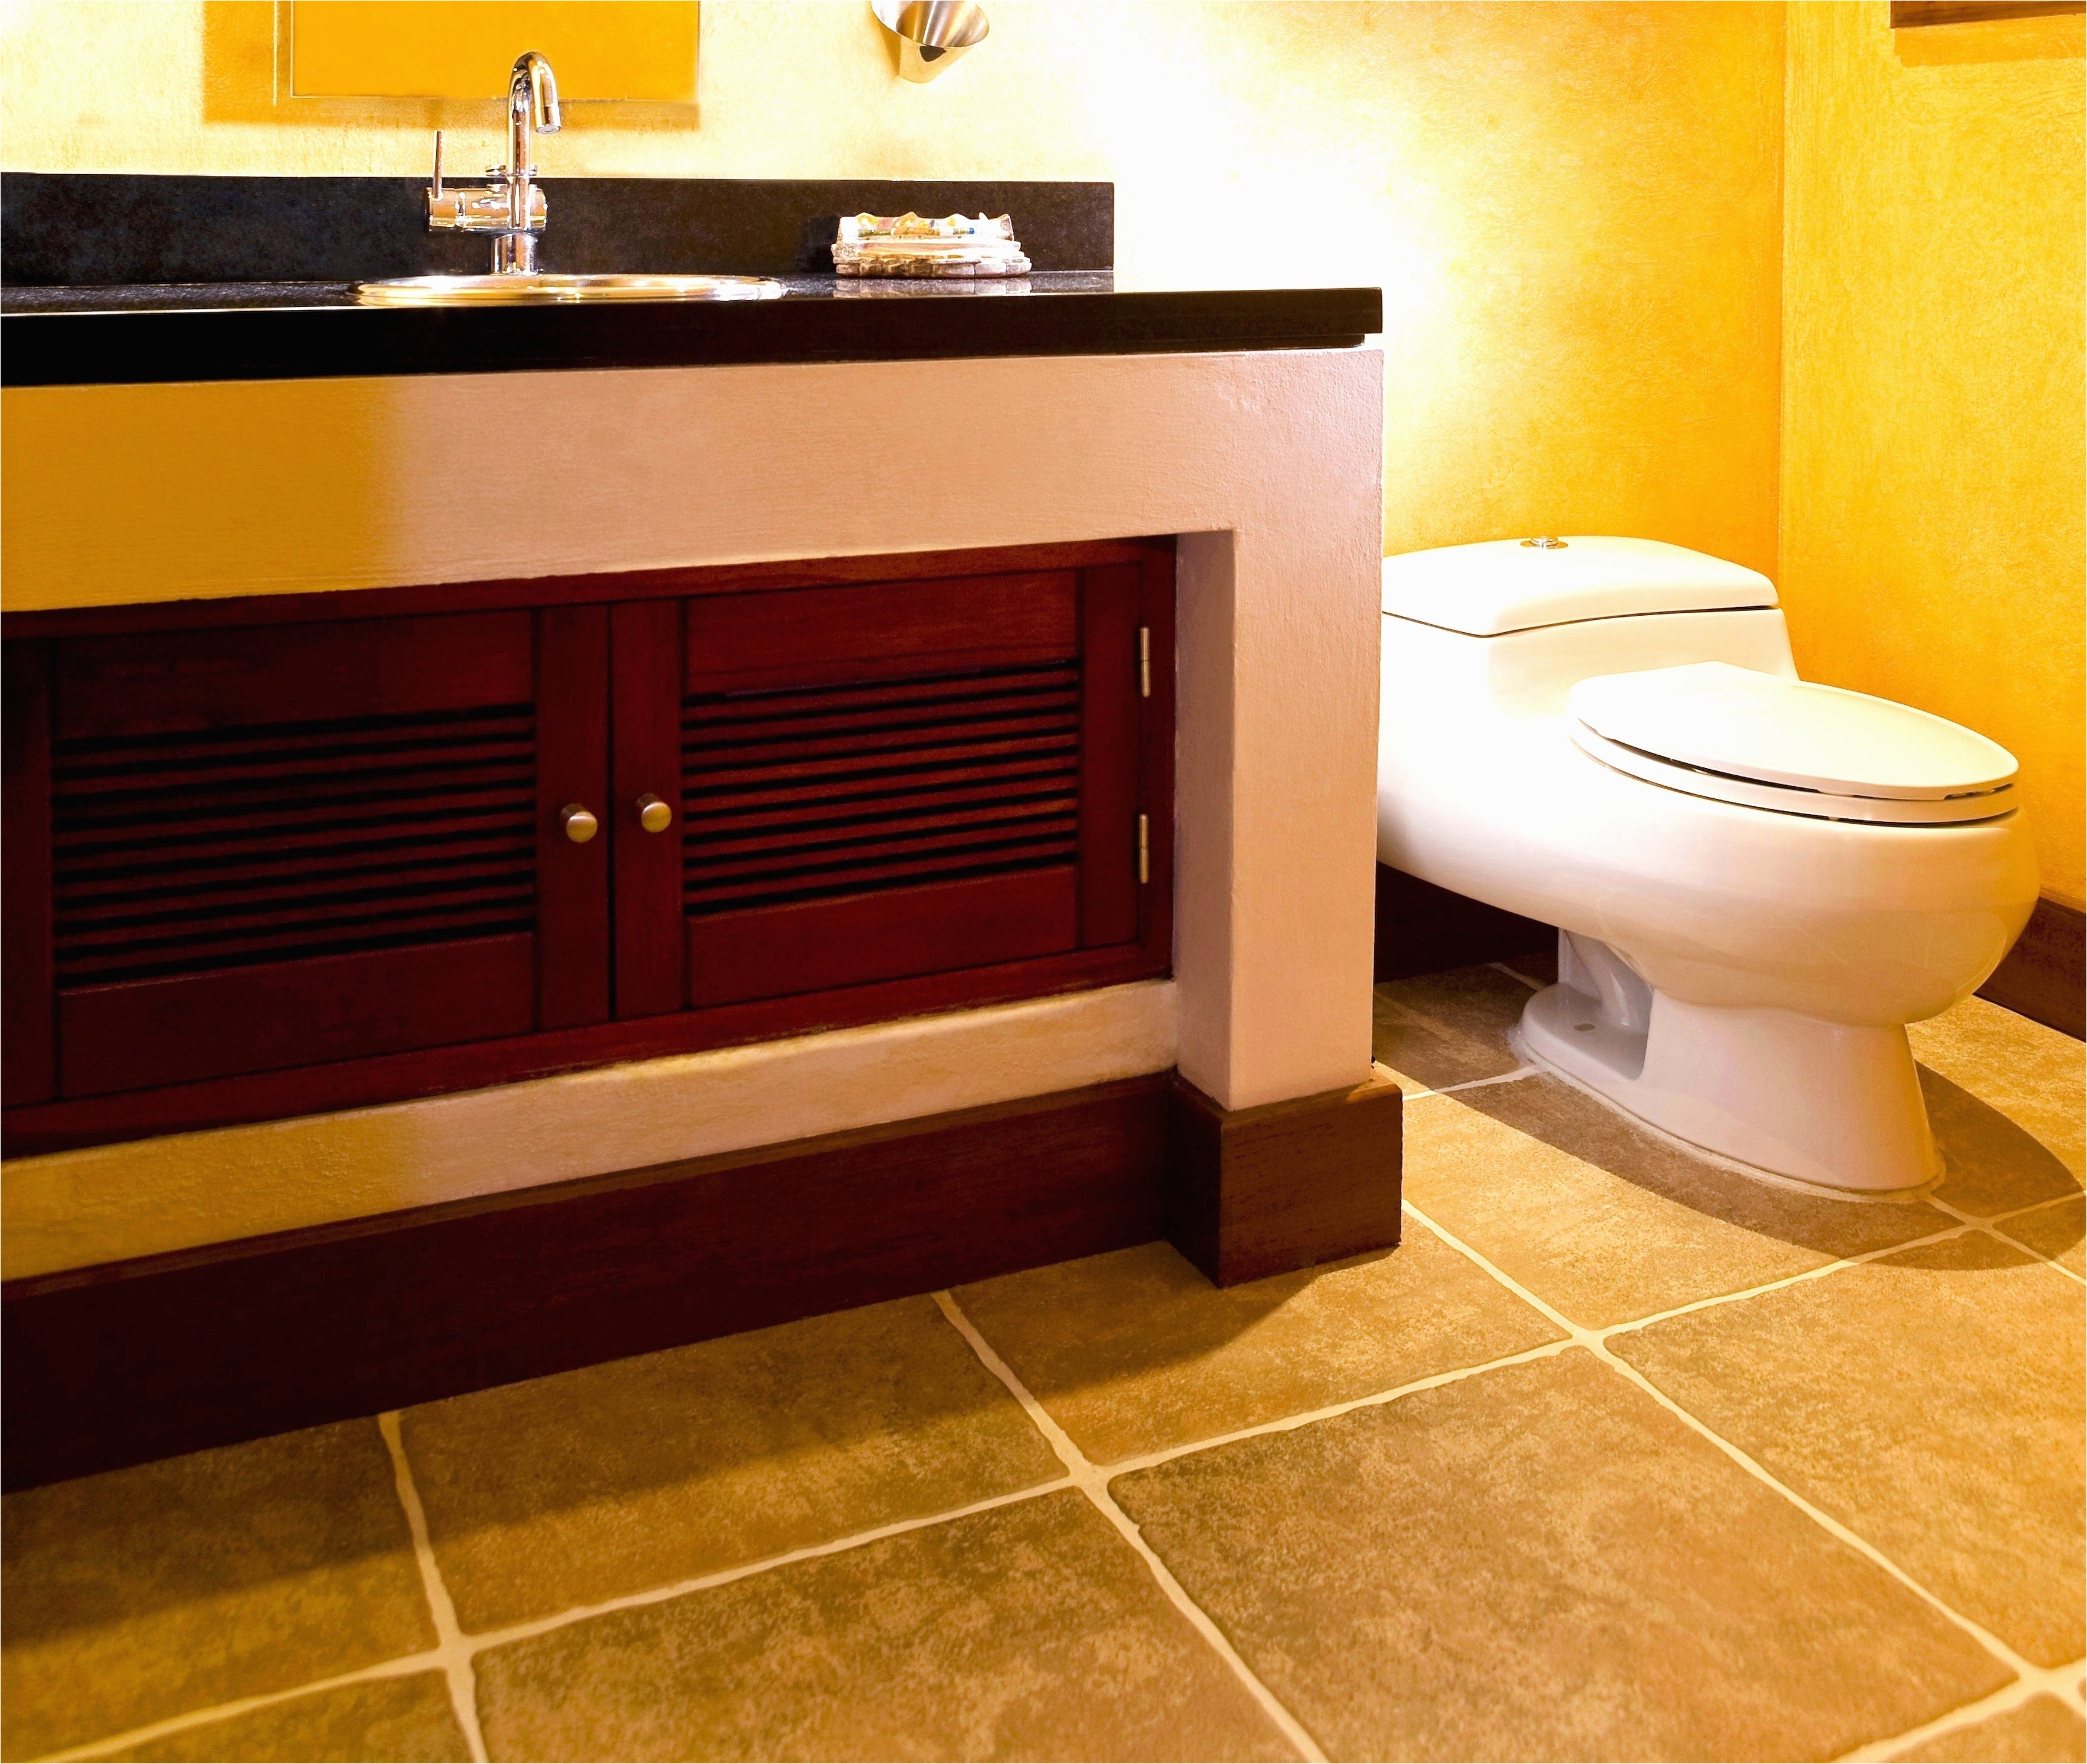 bathroom tiles pictures for small bathroom new home decor tile best floor tiles mosaic bathroom 0d